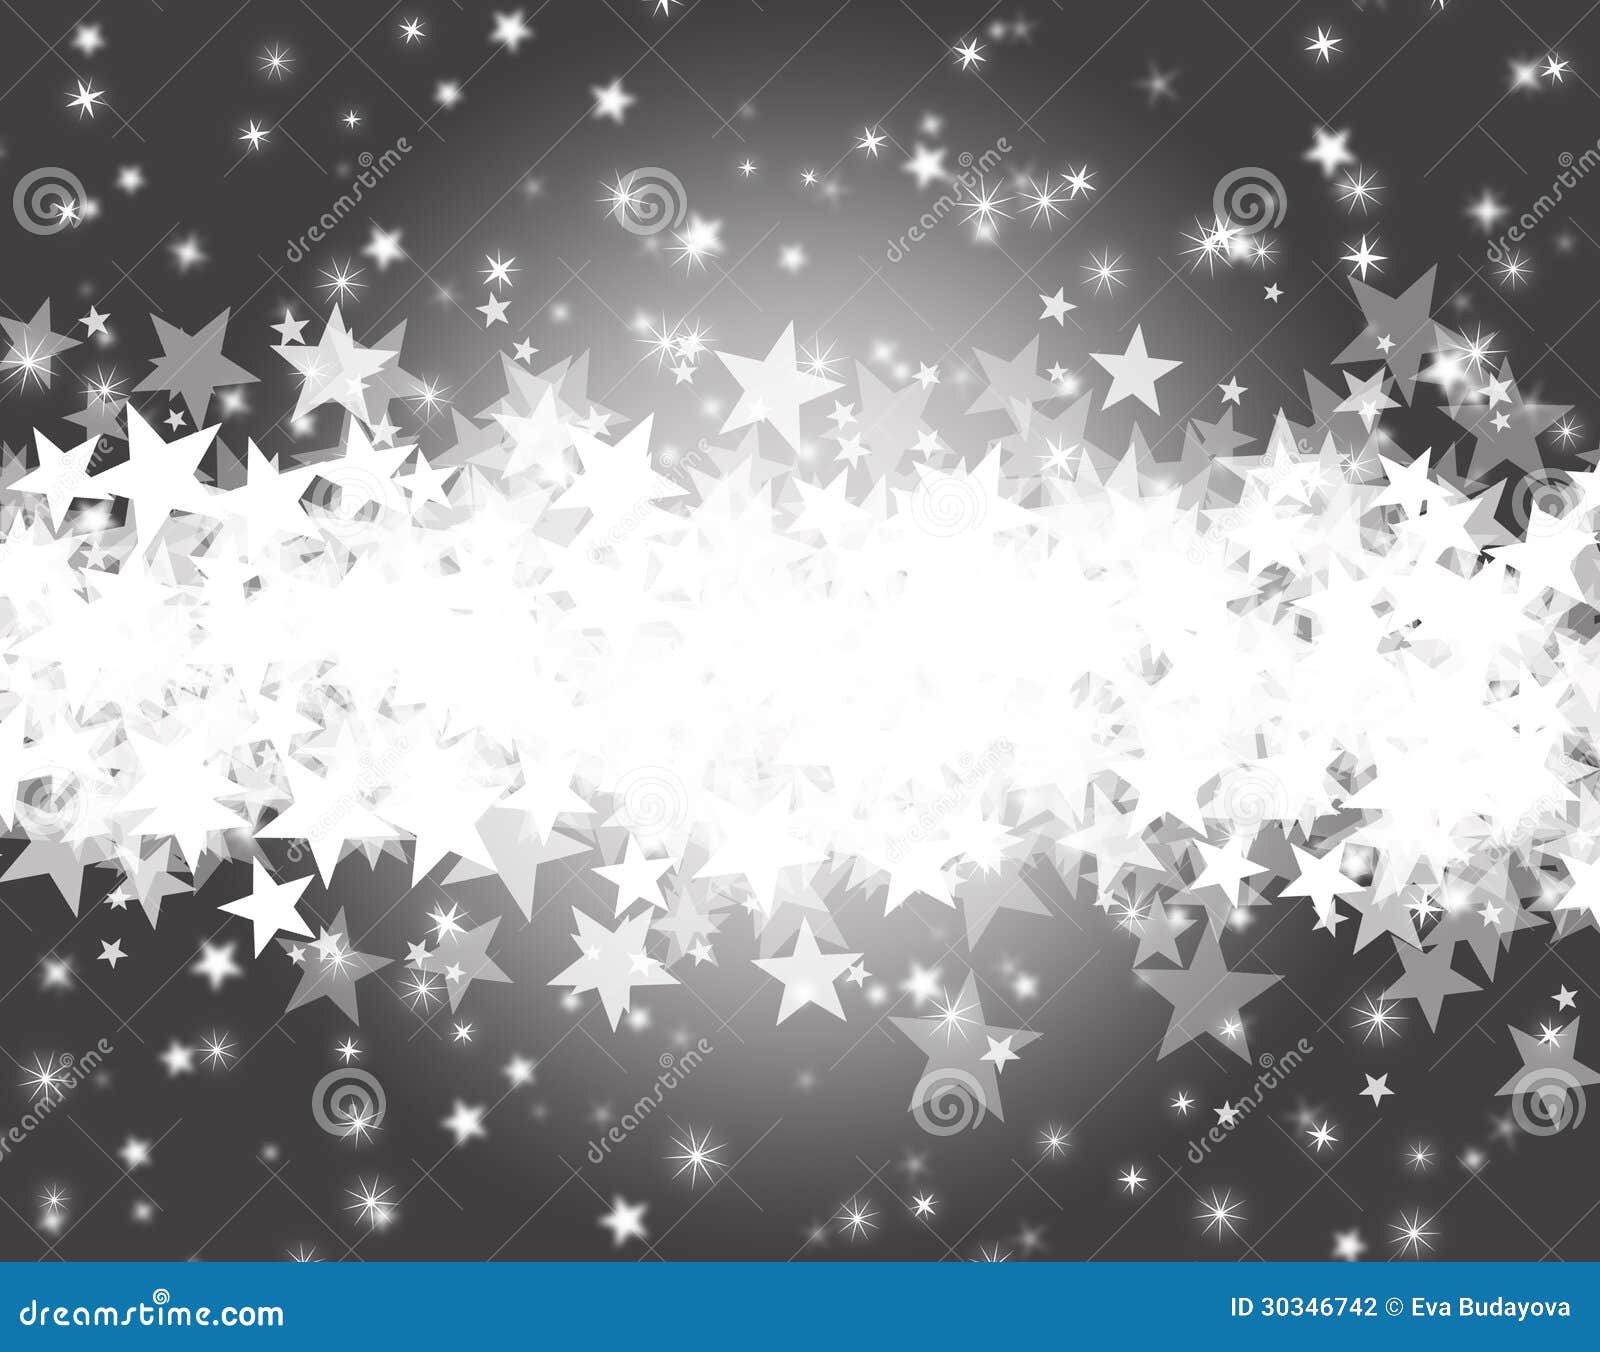 Stars stock illustration. Illustration of white, pretty - 30346742